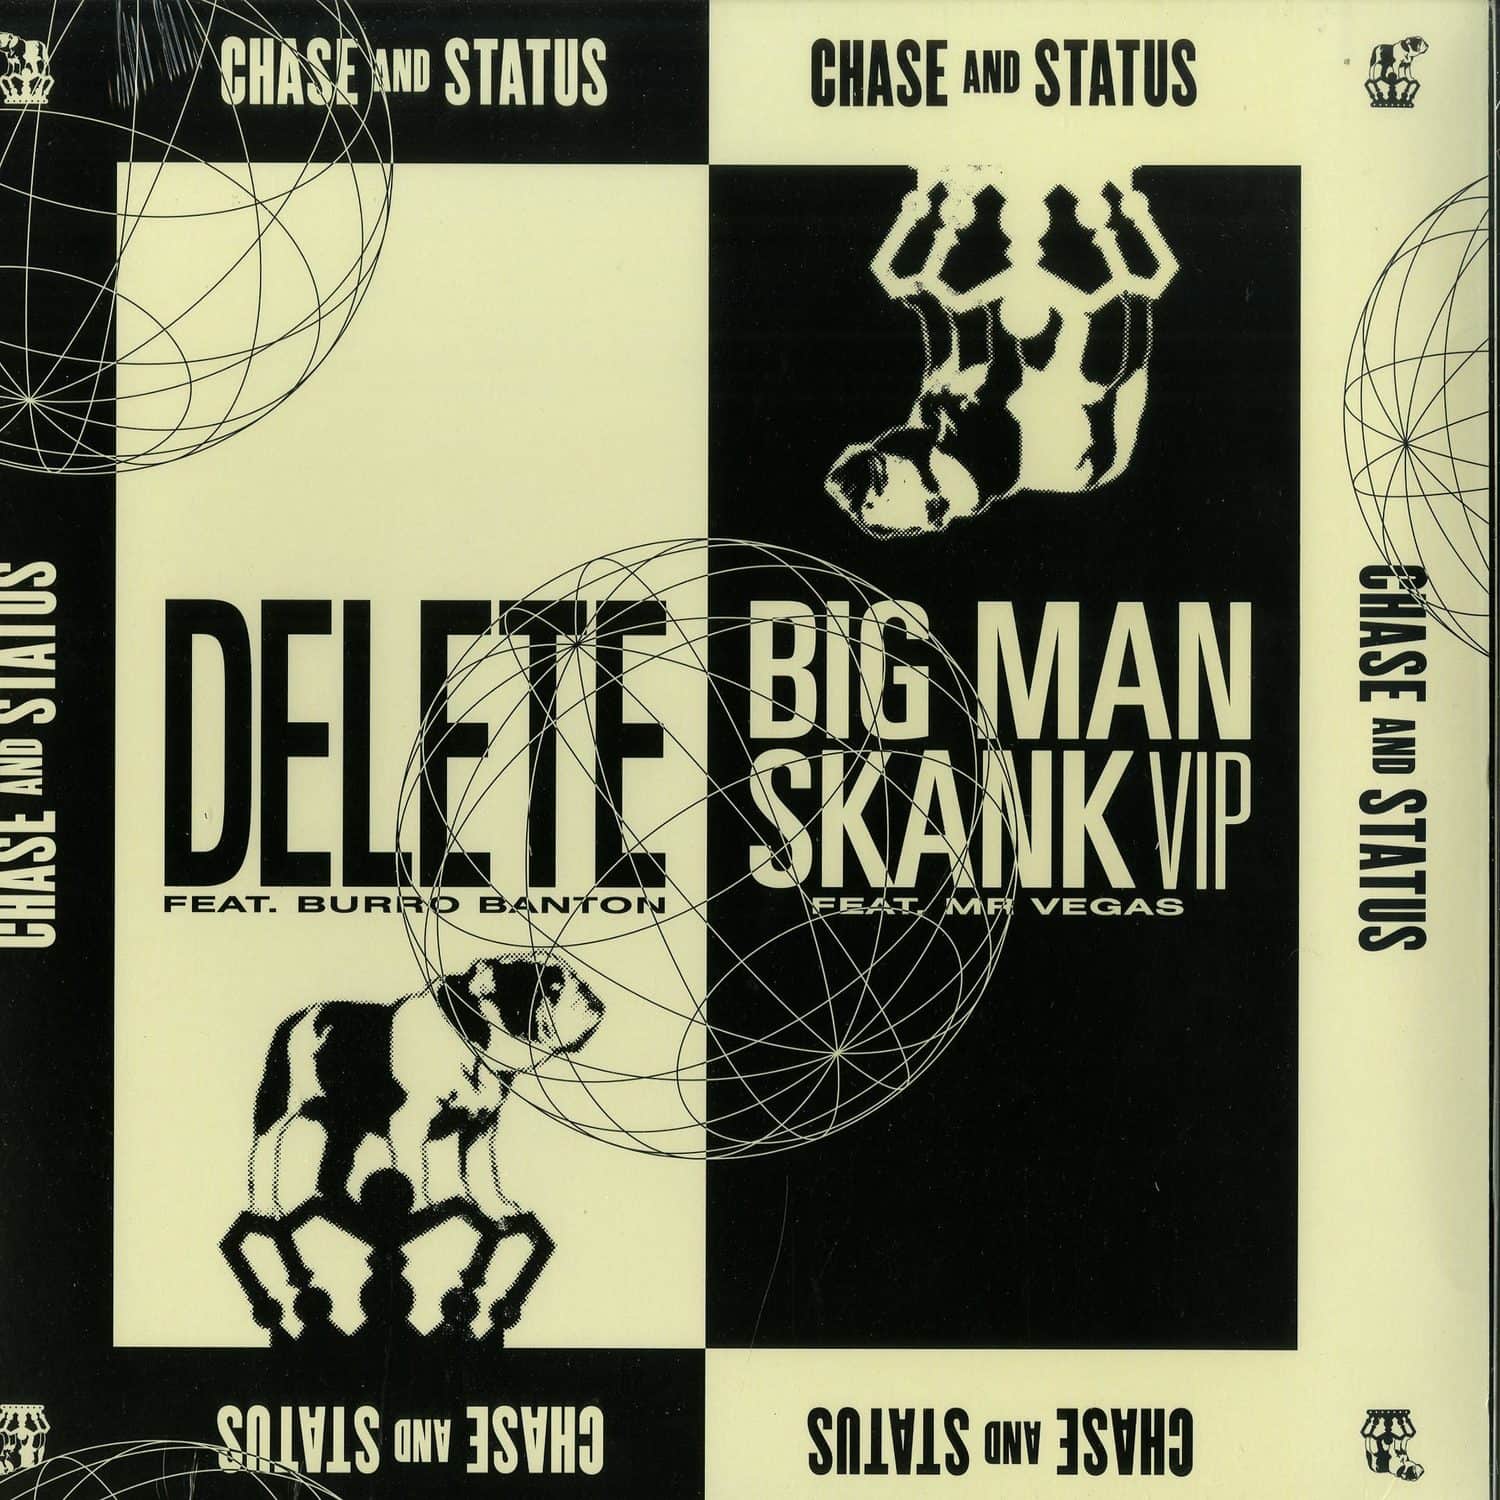 Chase & Status - DELETE / BIG MAN SKANK 